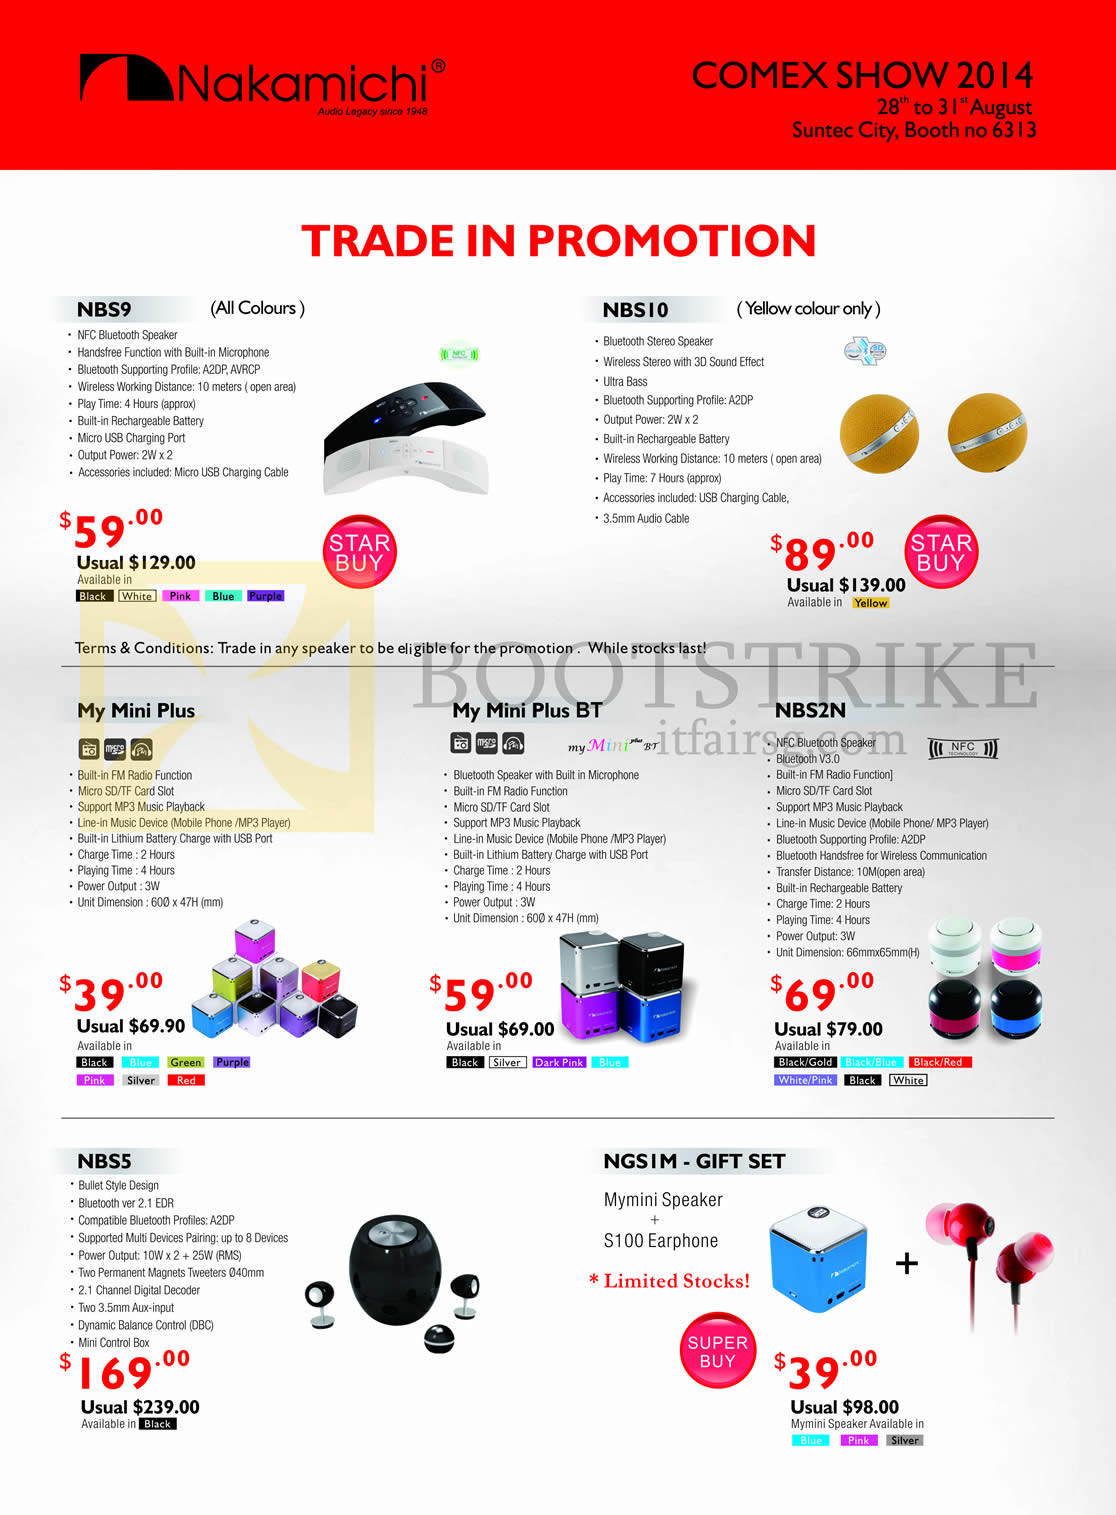 COMEX 2014 price list image brochure of Sprint-Cass Nakamichi Headsets, Earphones, MW3000, HS3000, V139, MV7, T169, T169, MV10, NAH950NC, BT201, NW7000